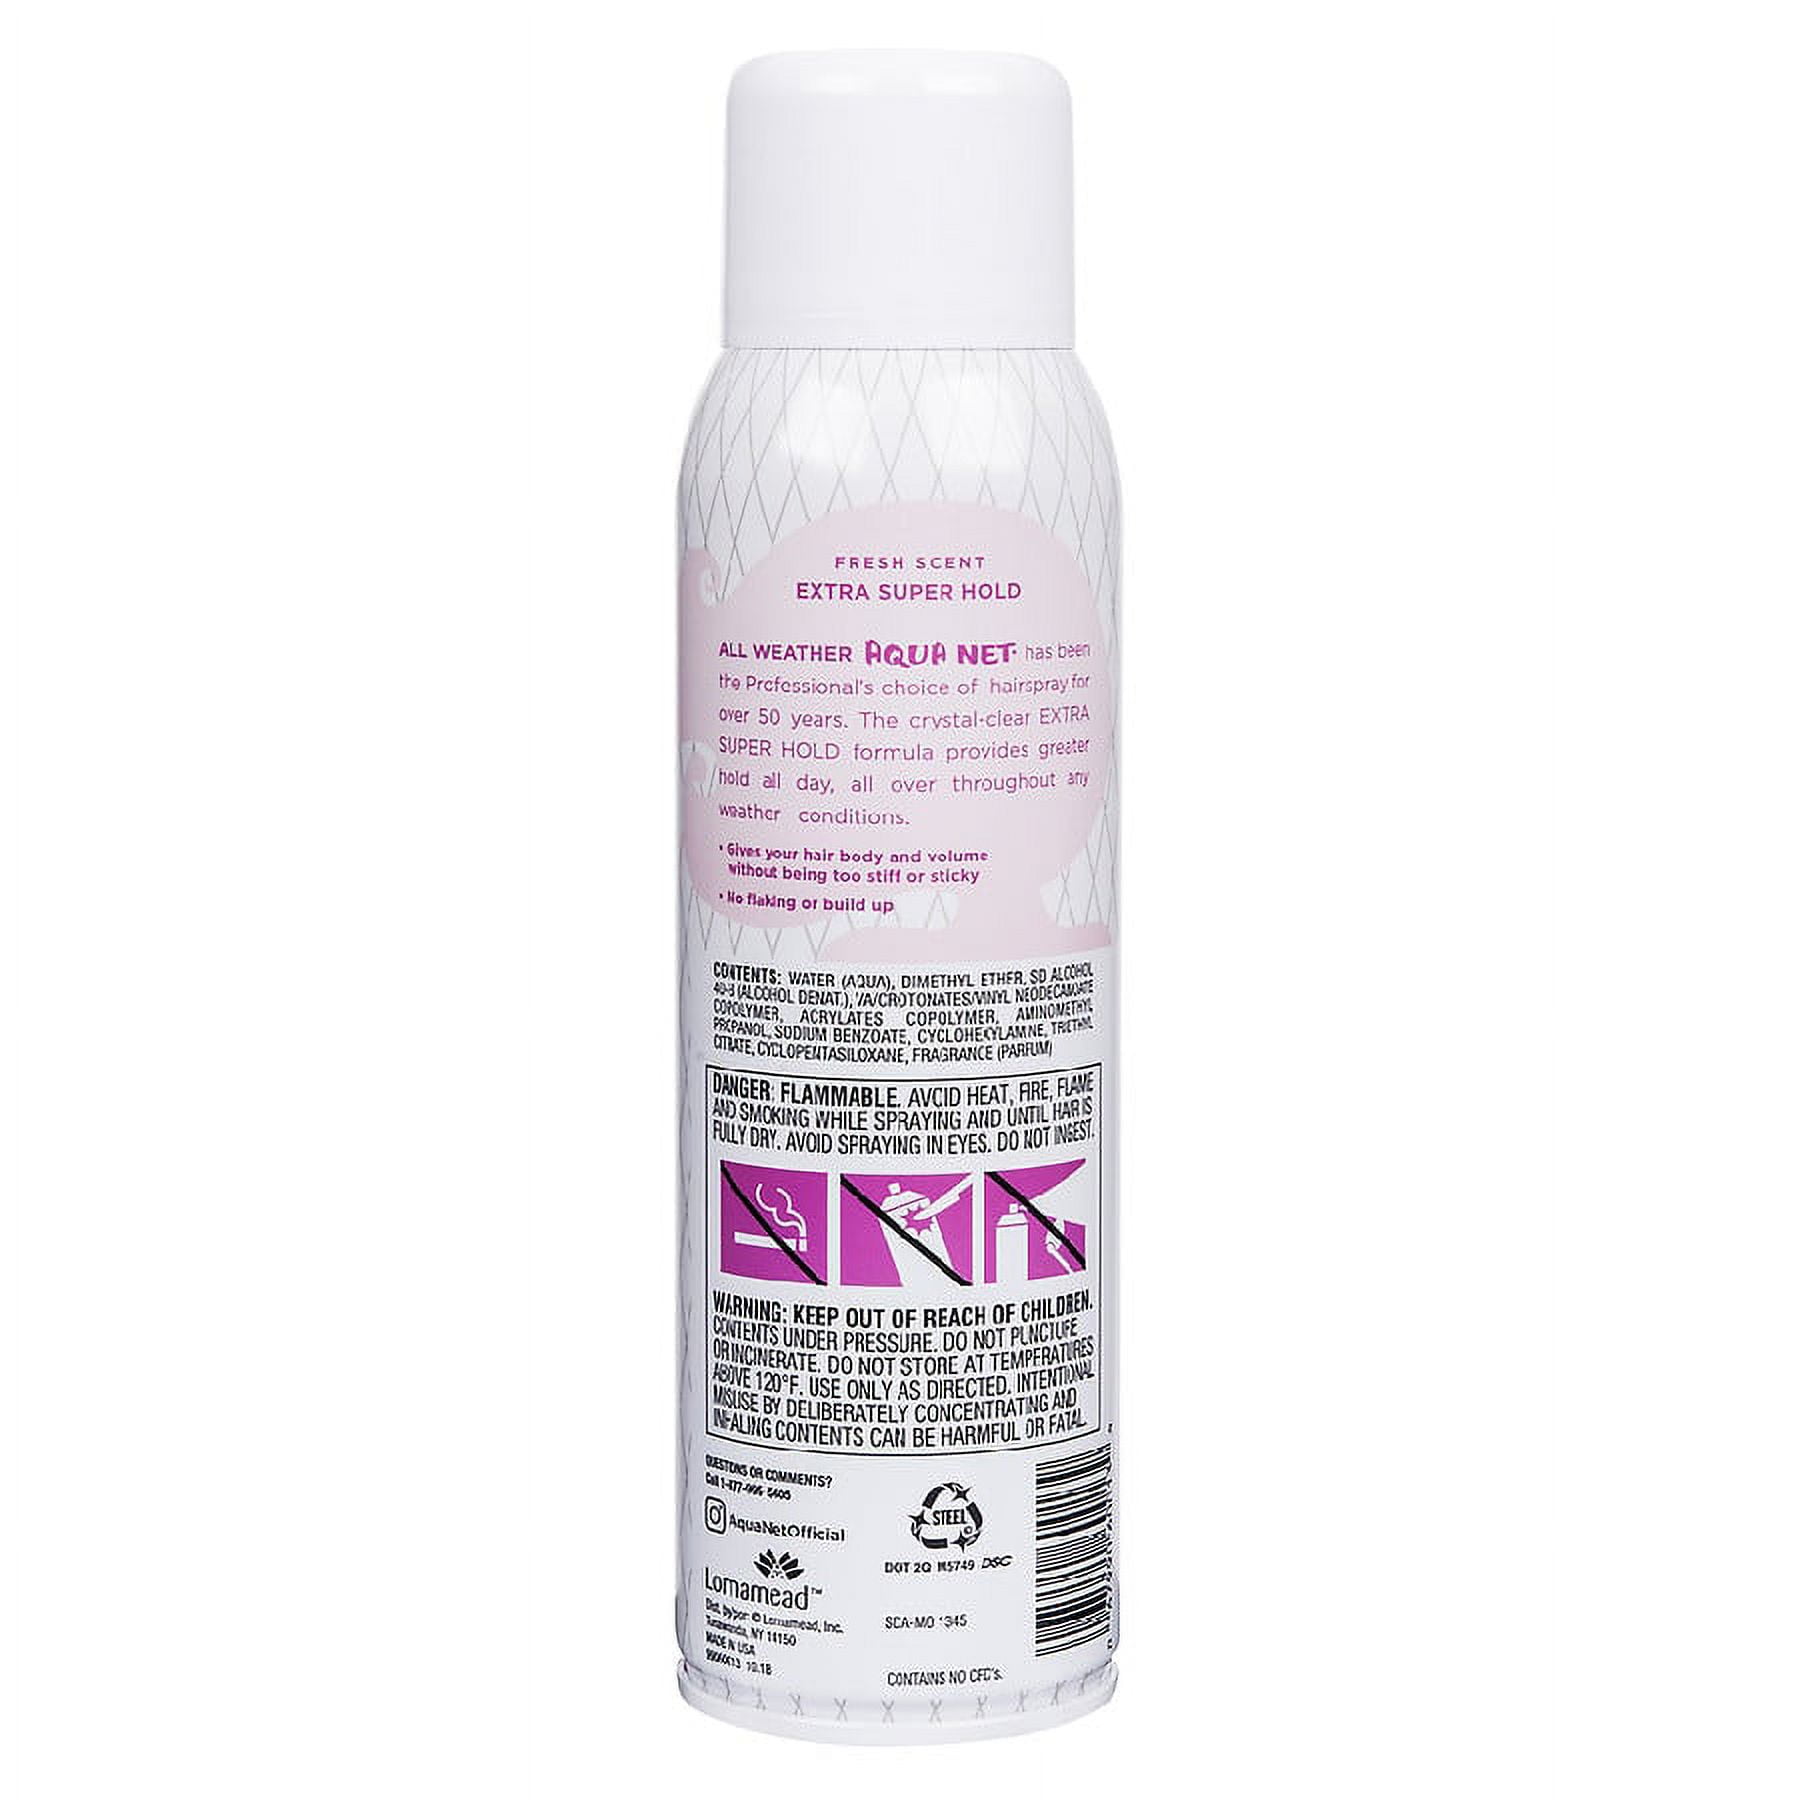 Aqua Net Extra Super Hold Hairspray (aerosol can) - Reviews